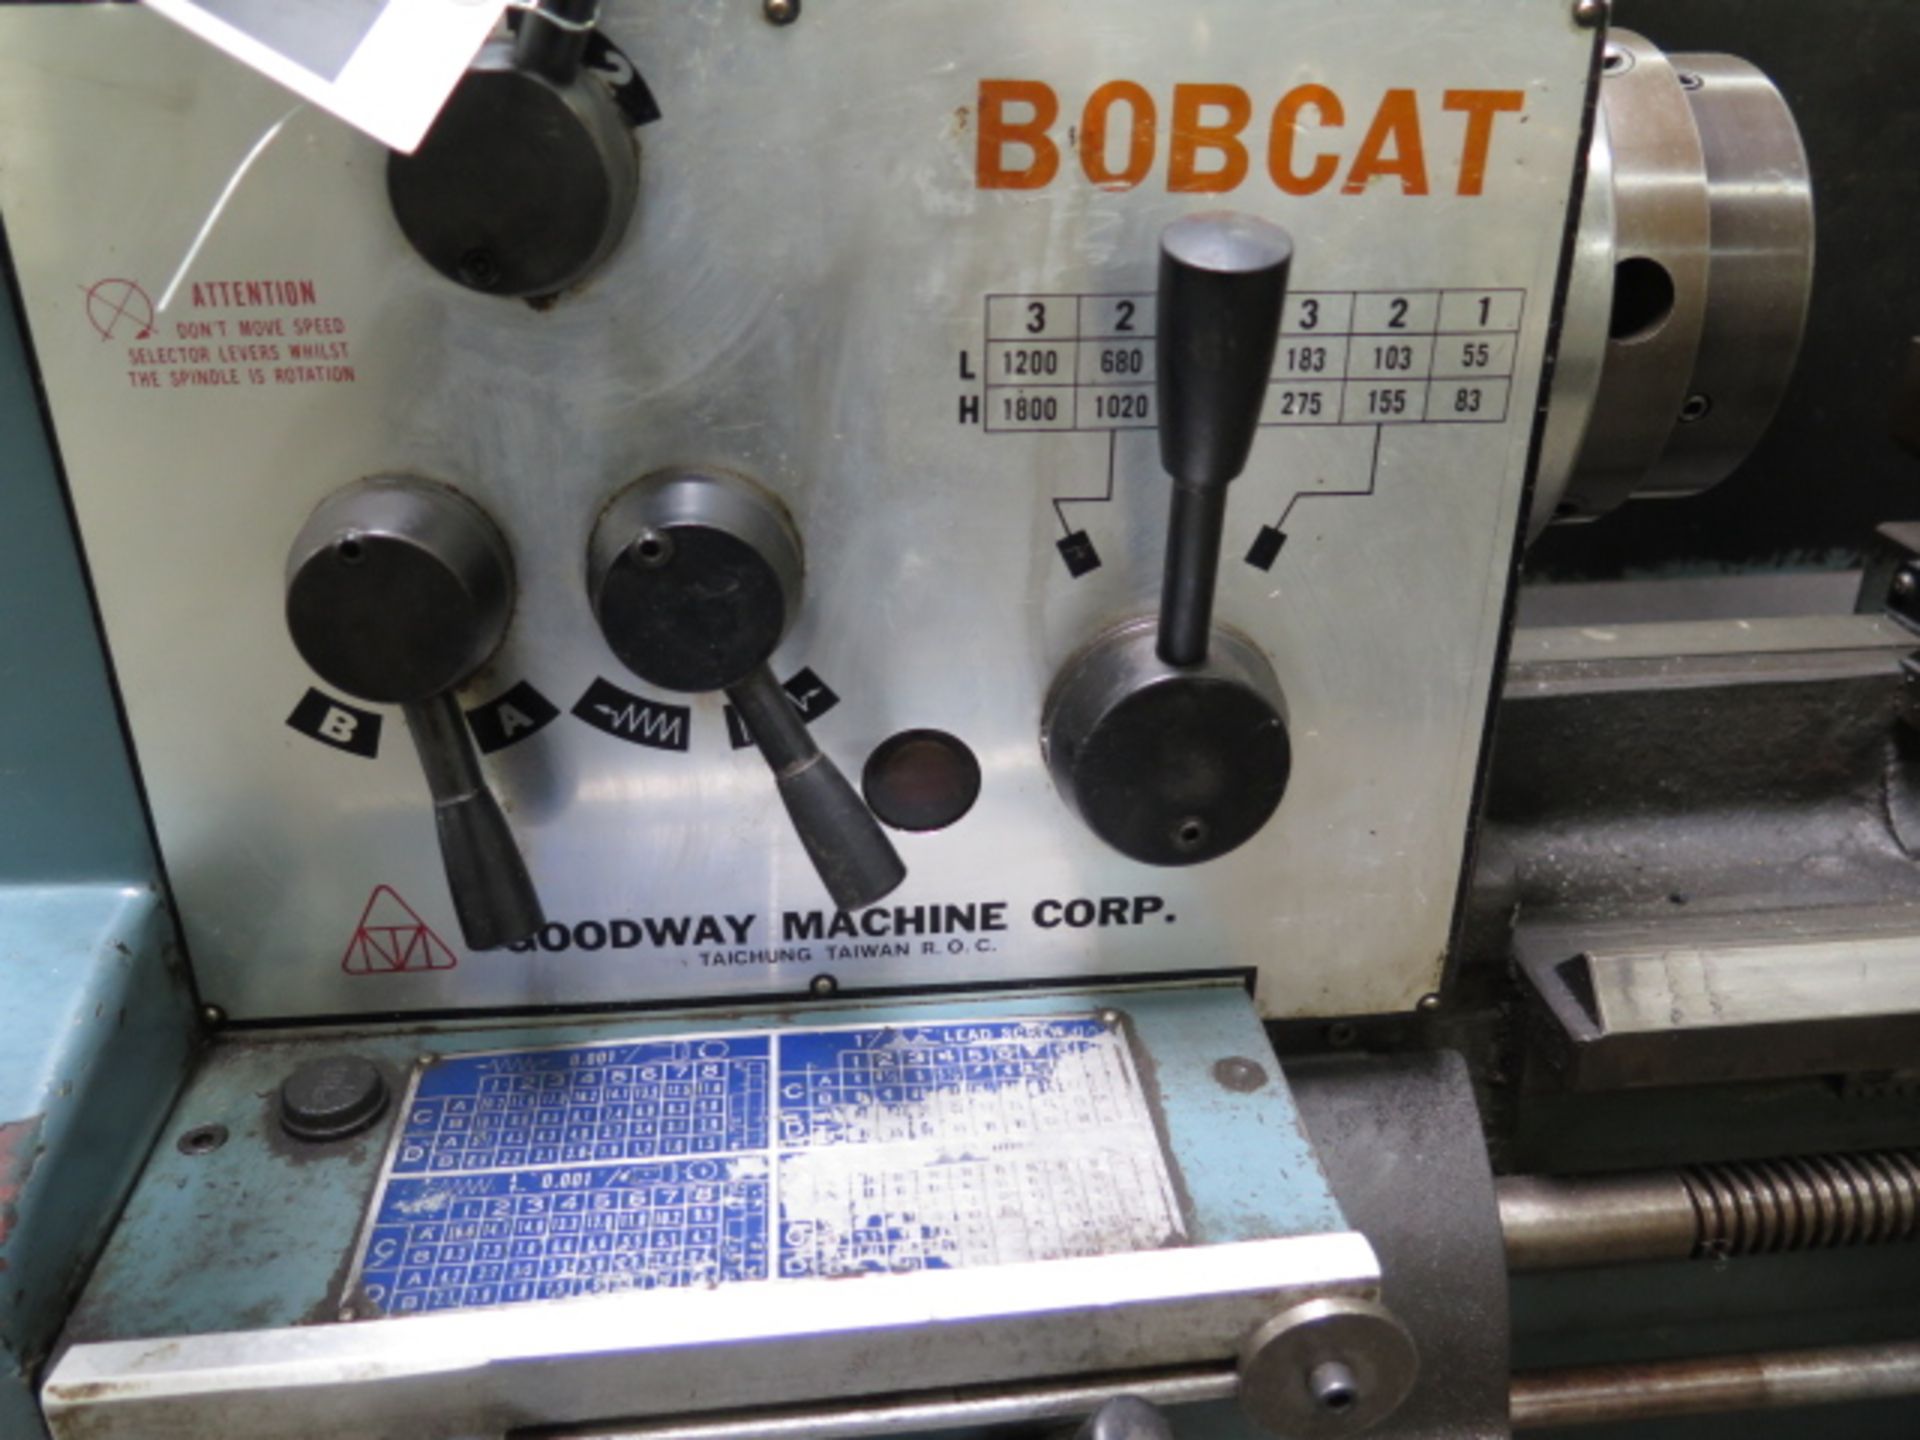 Goodway “Bobcat” mdl. GW-1440 14” x 40” Geared Head Gap Bed Lathe s/n 65128 w/ 55-1800 RPM, Inch/ - Image 5 of 5